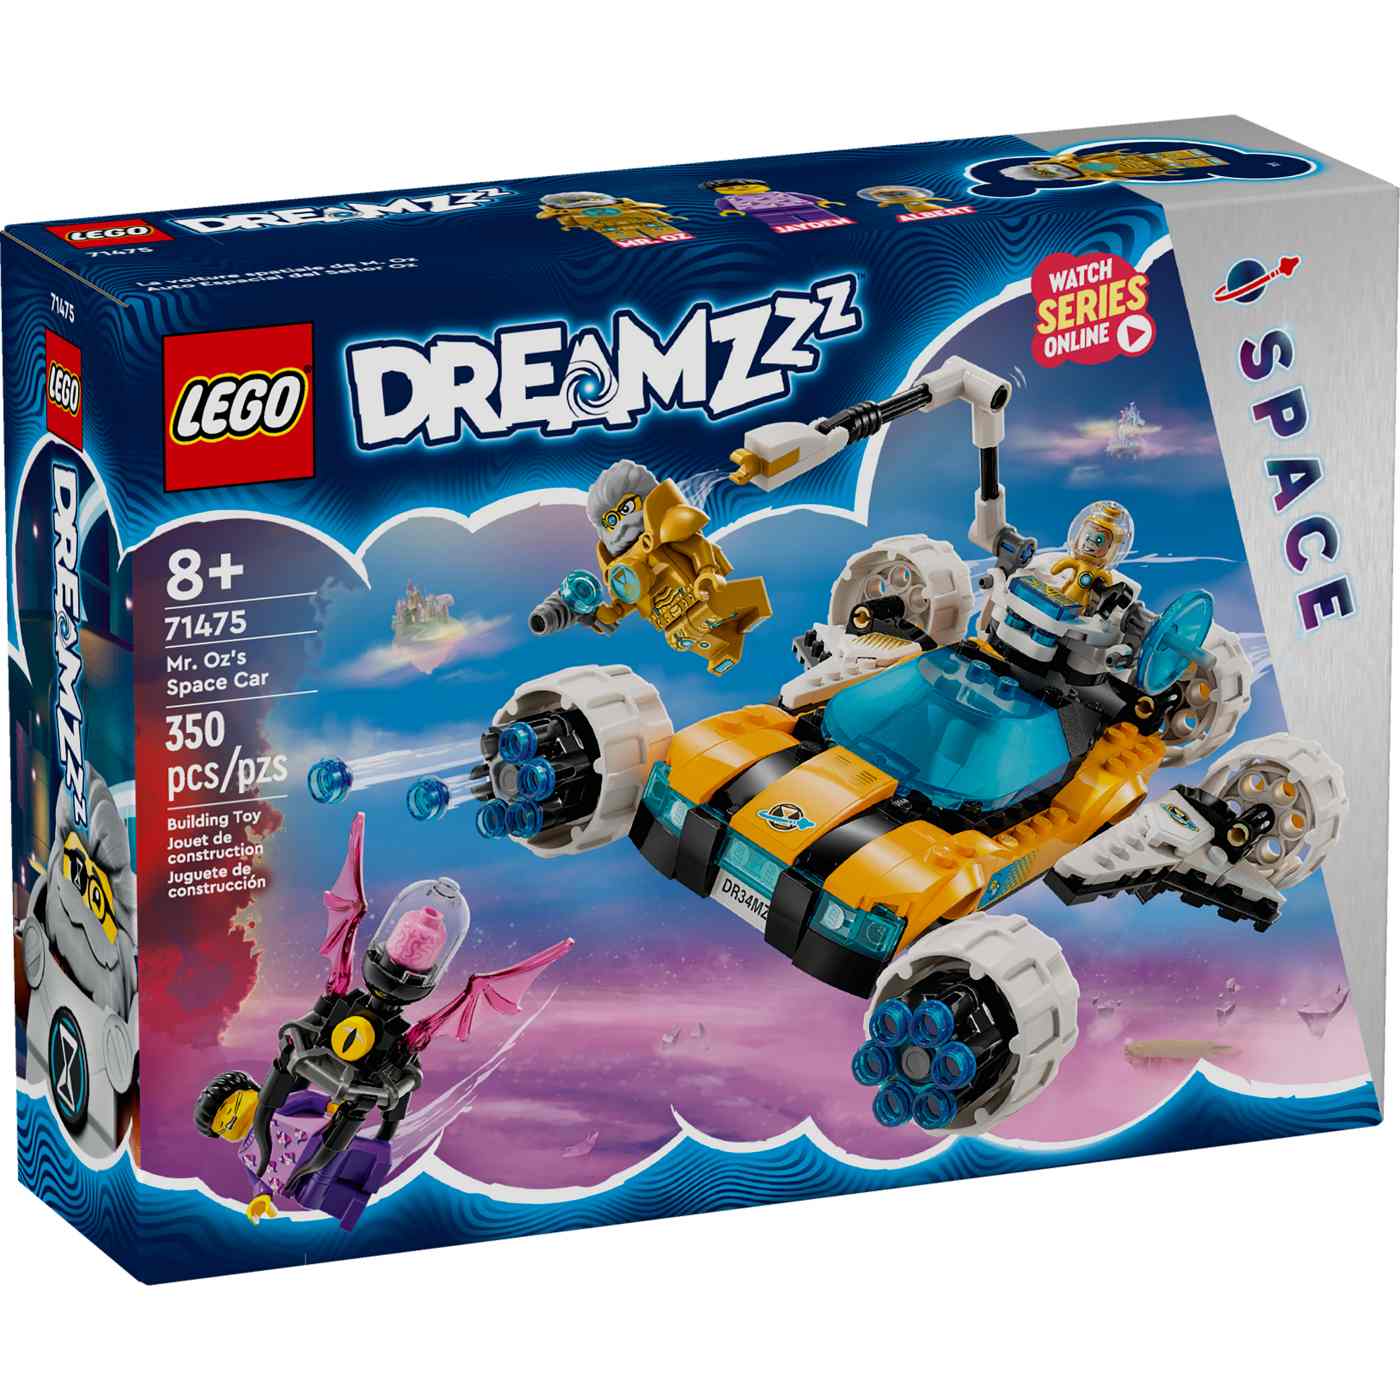 LEGO DREAMZzz Mr. Oz's Space Car Set; image 1 of 2